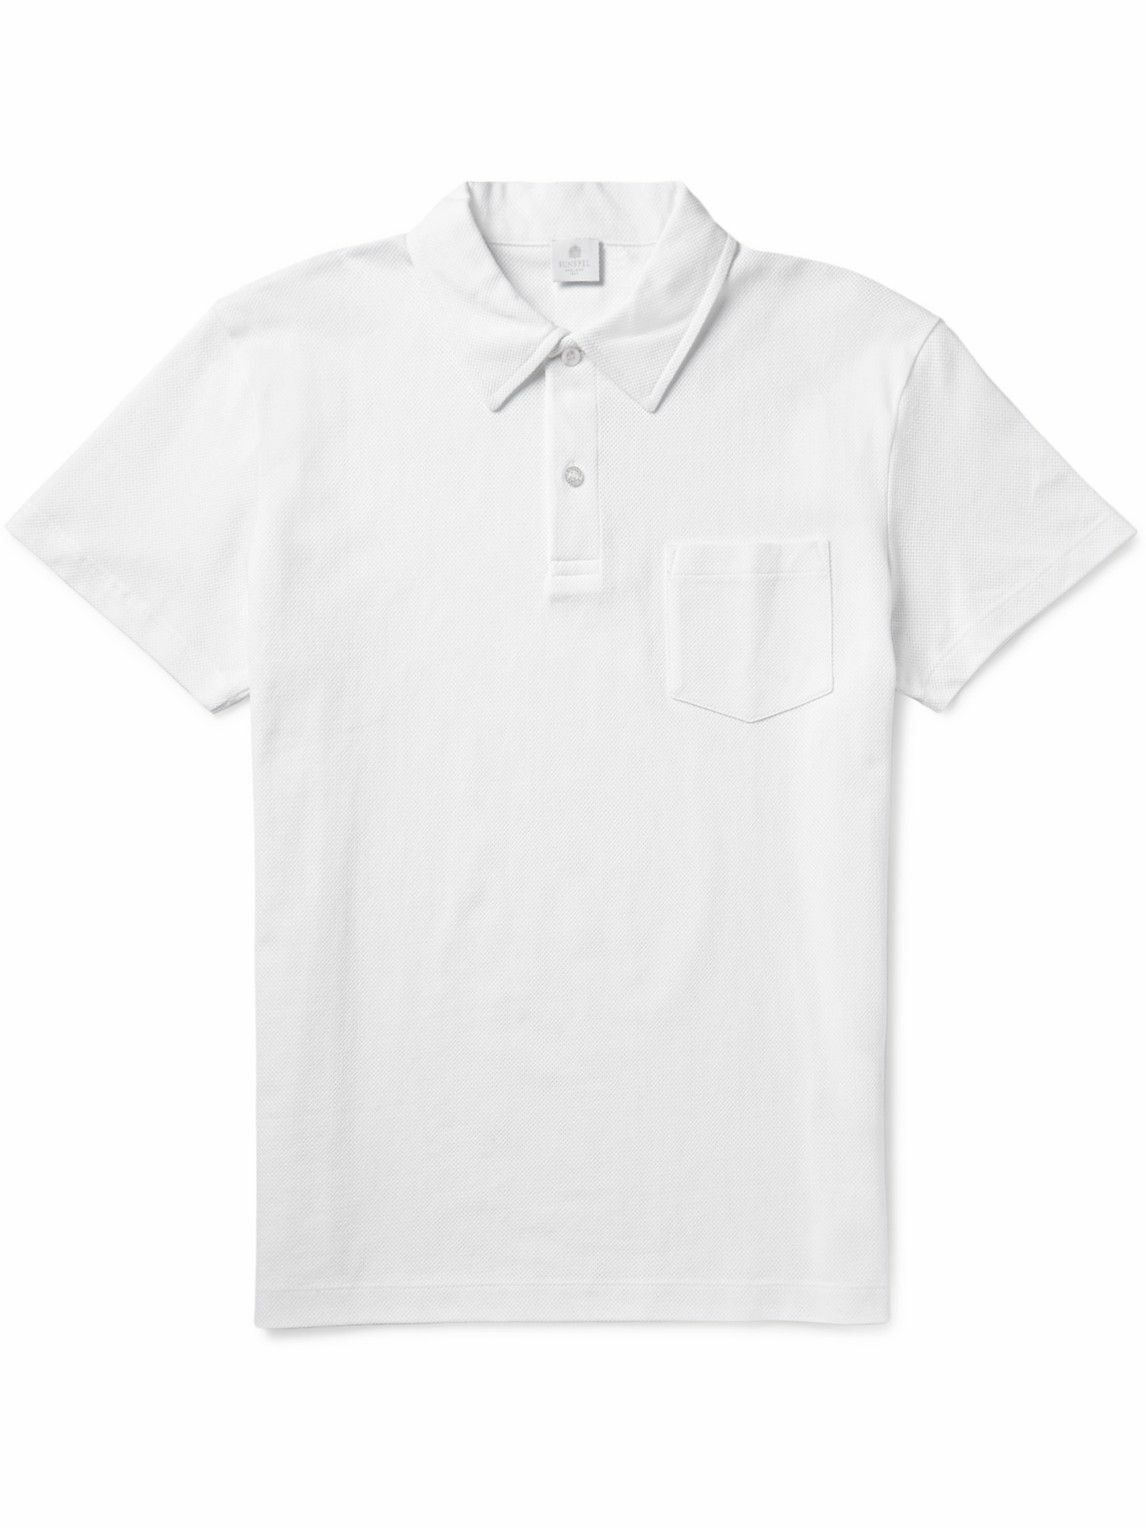 Sunspel - Riviera Cotton-Mesh Polo Shirt - White Sunspel